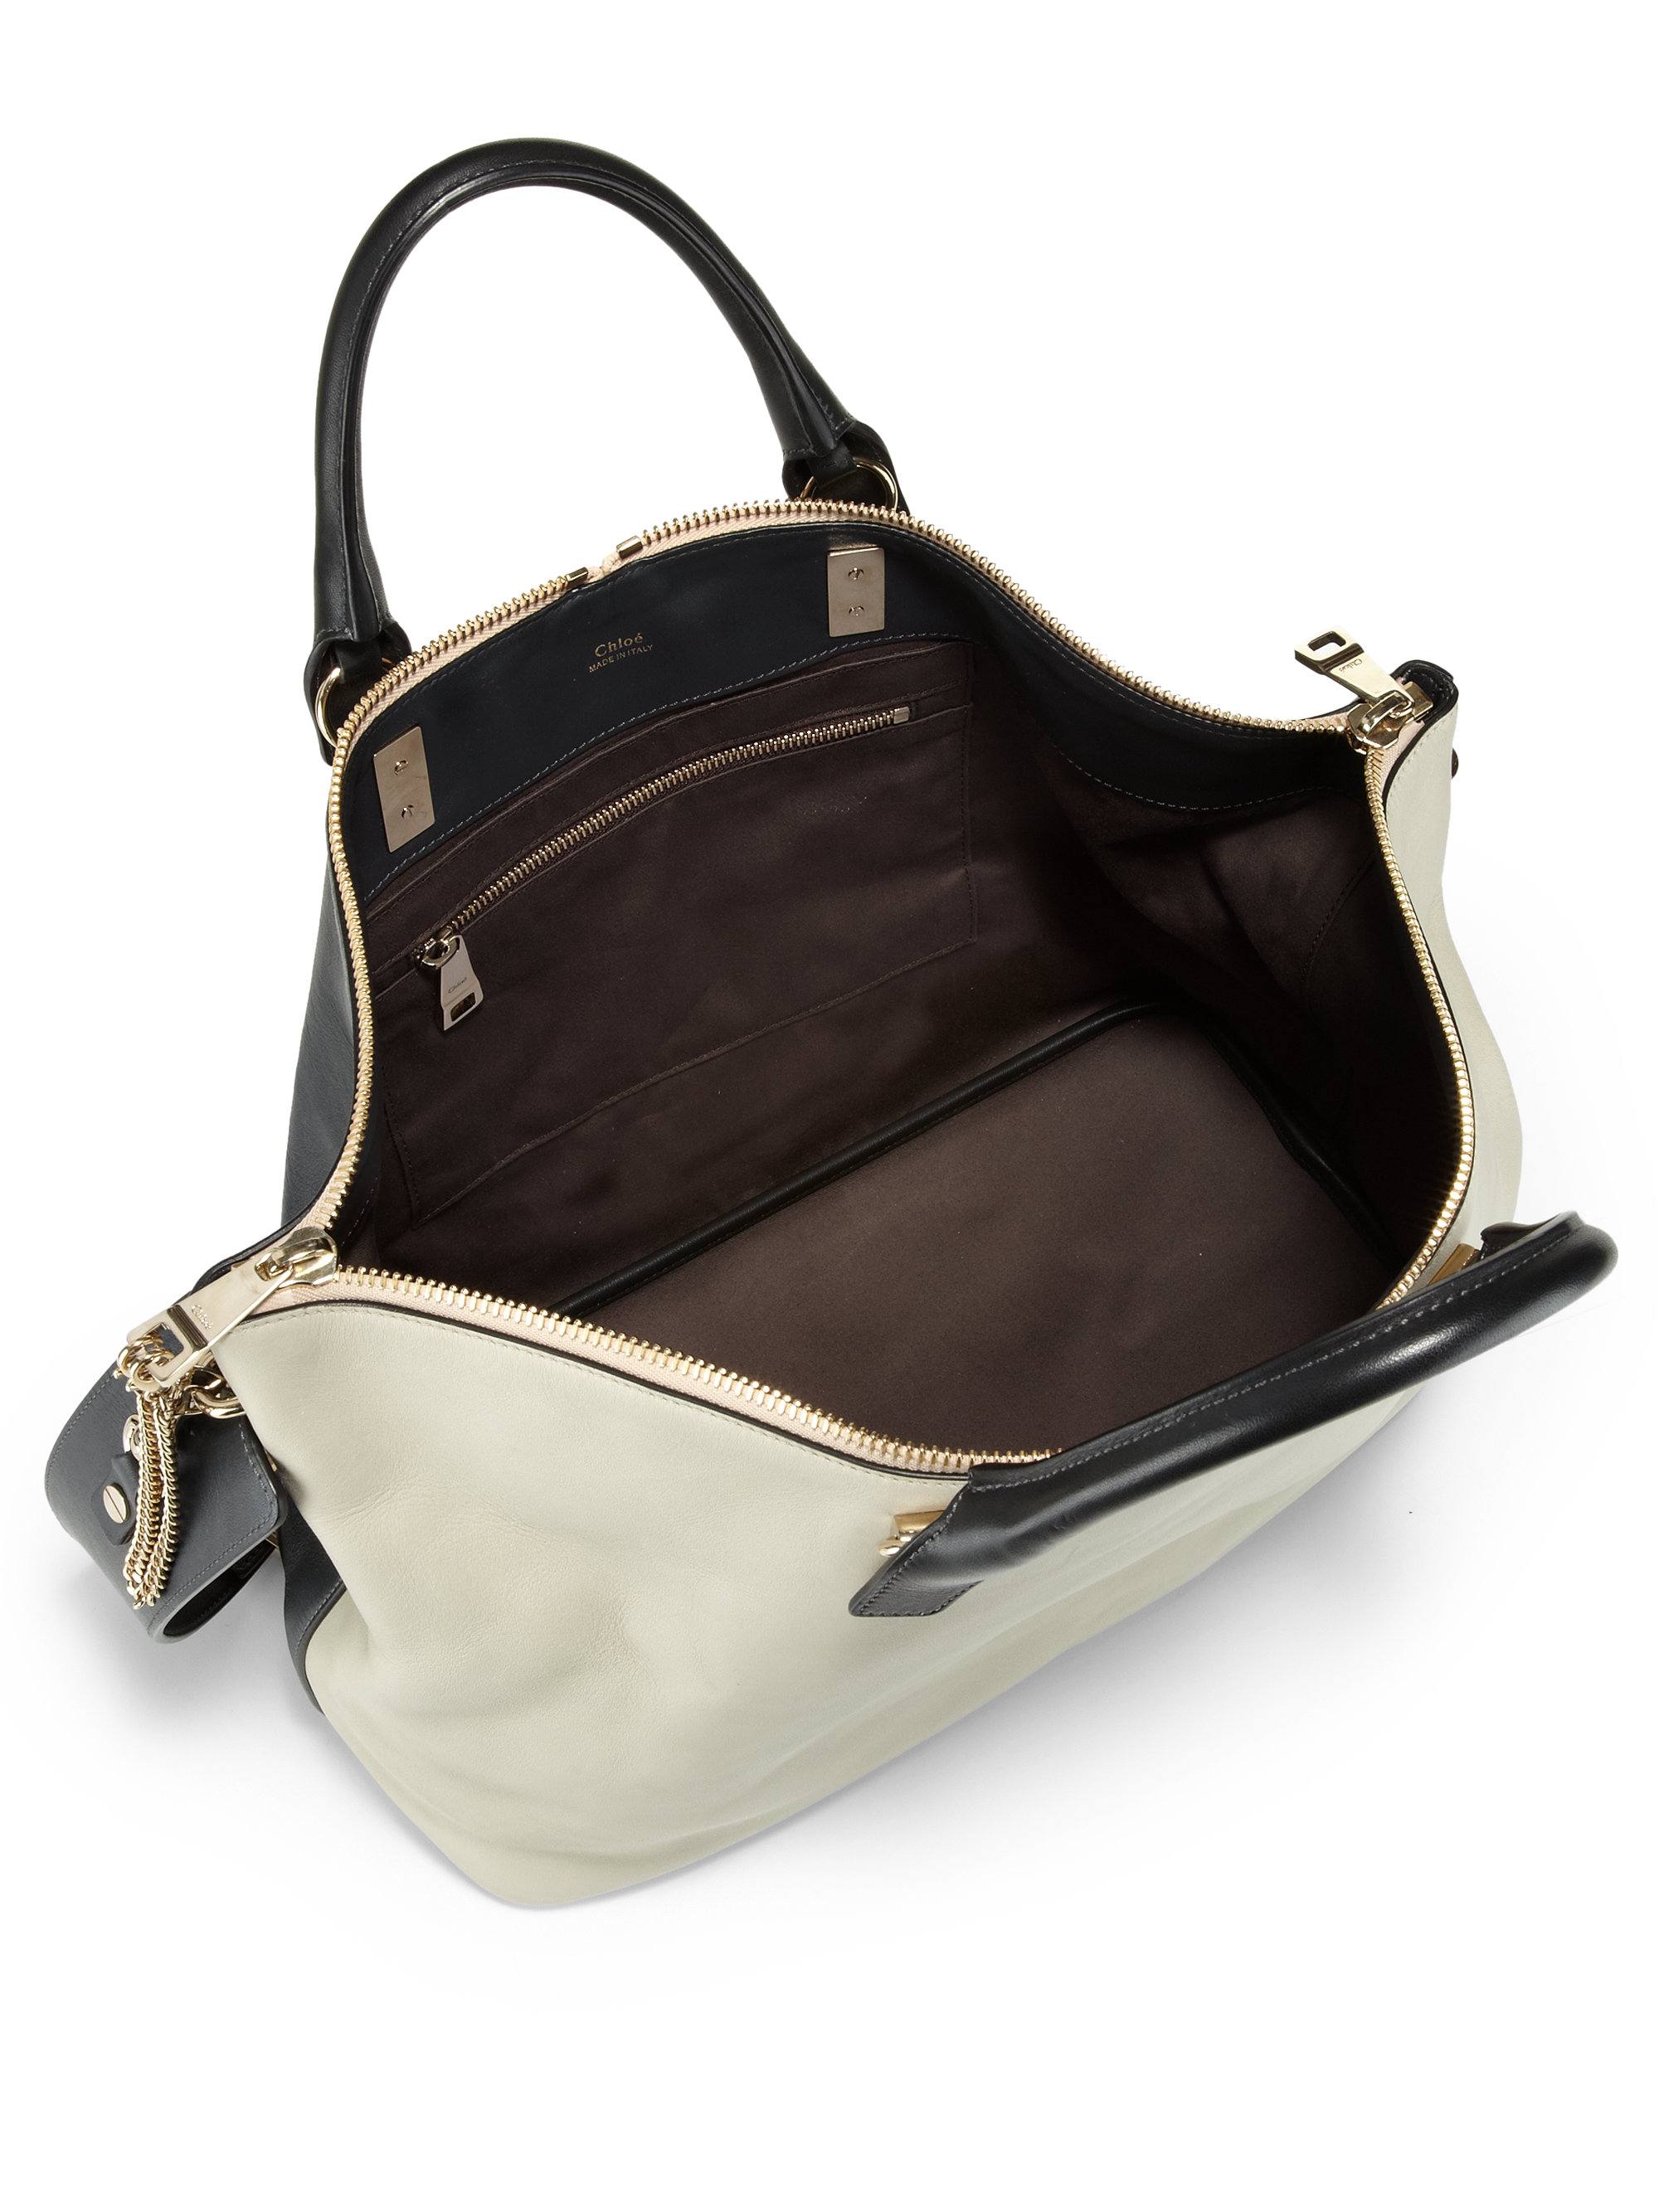 chloe satchel handbag - Chlo Baylee Medium Two-tone Leather Shoulder Bag in Beige ...